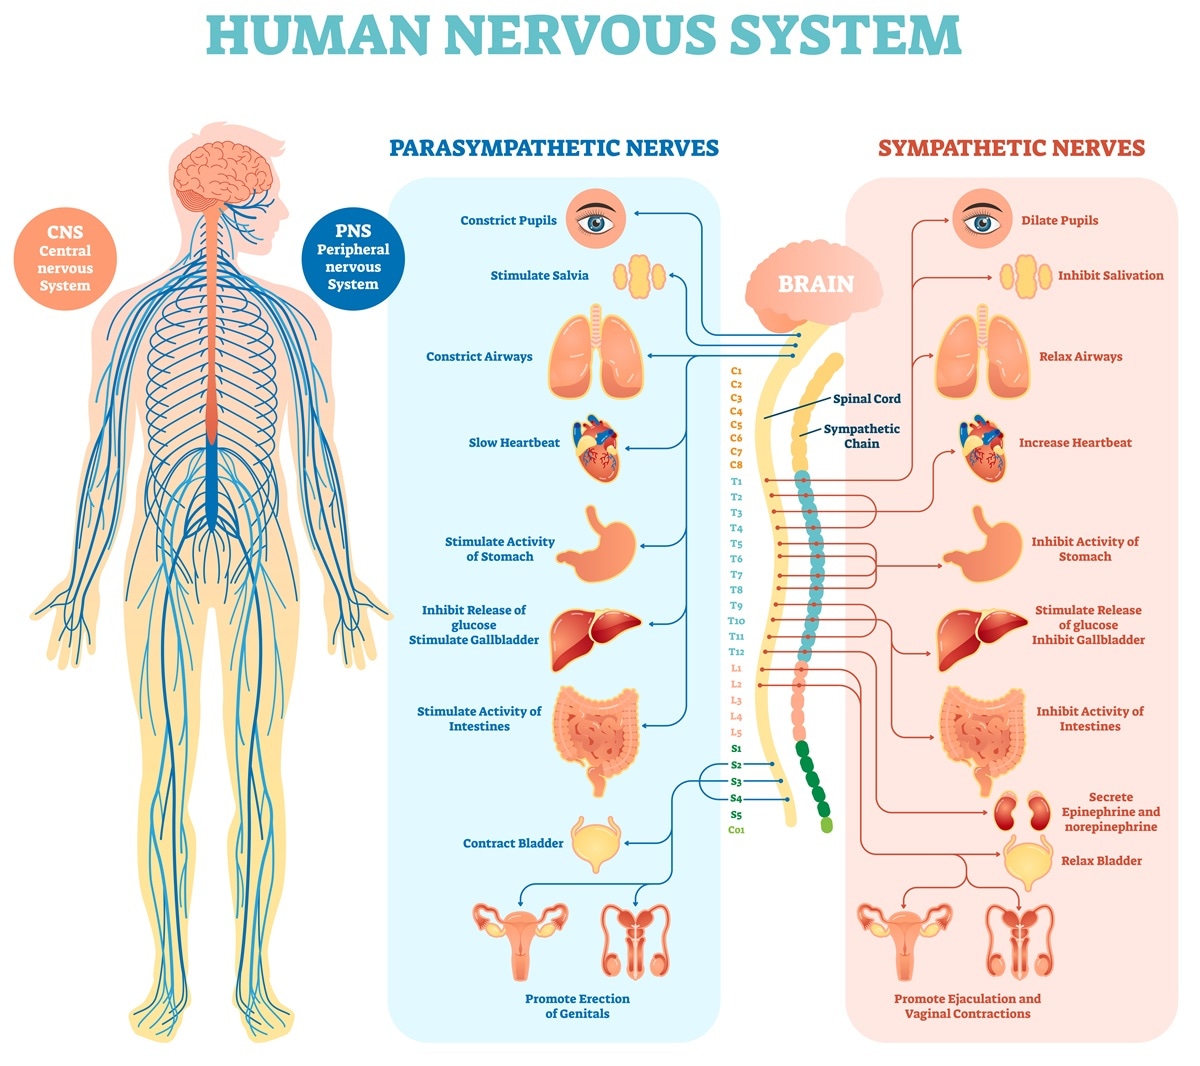 somatic nervous system and autonomic nervous system